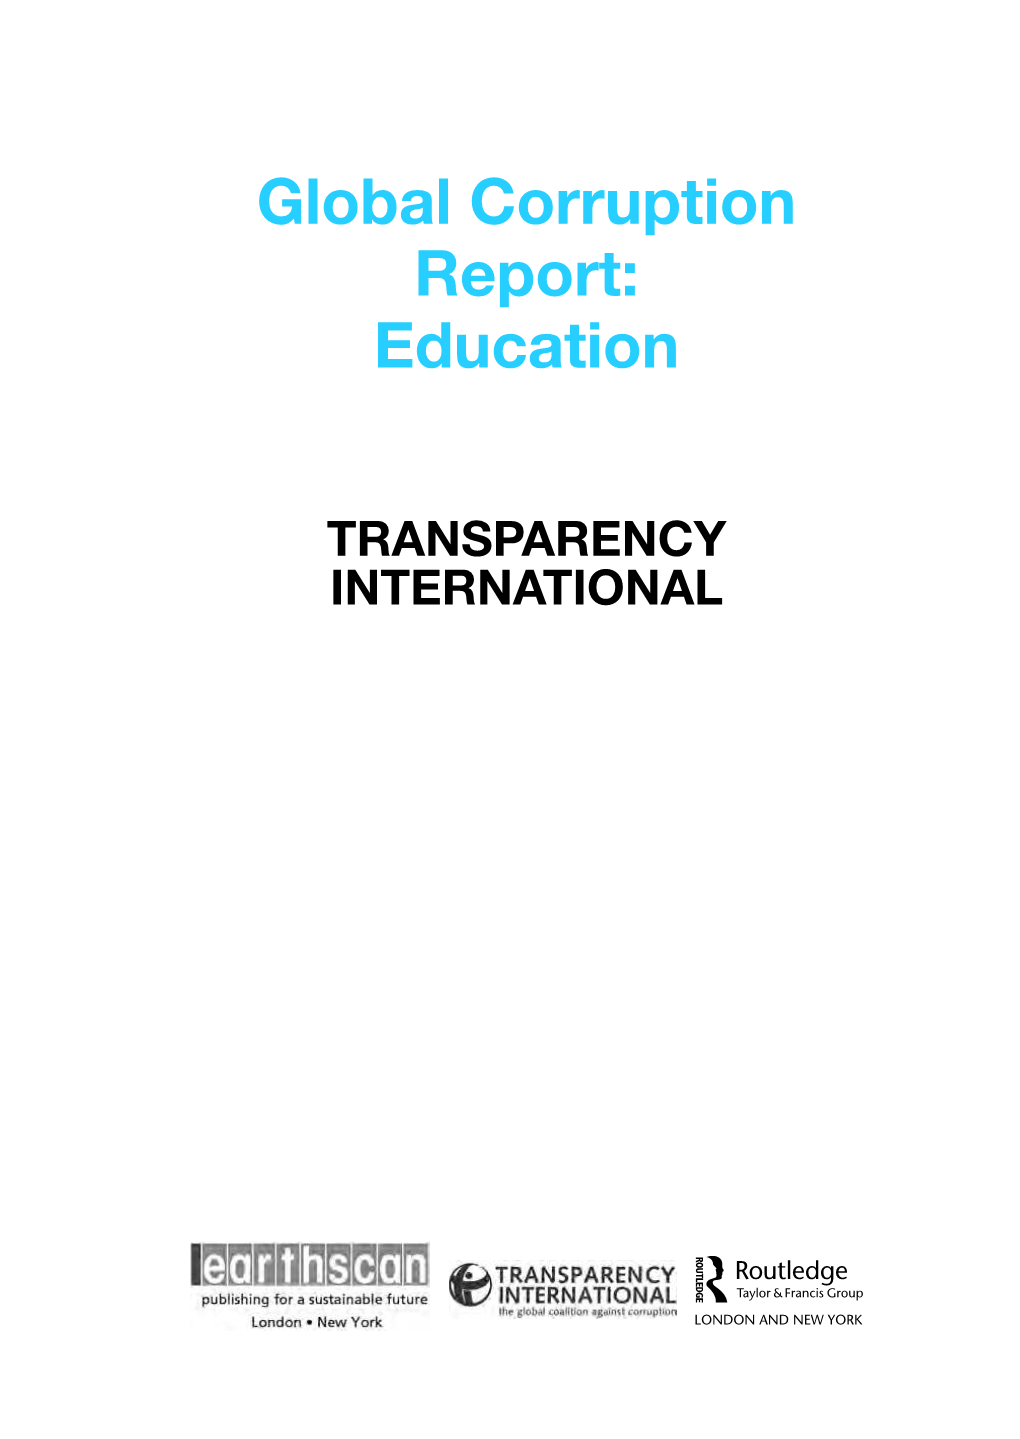 Global Corruption Report: Education